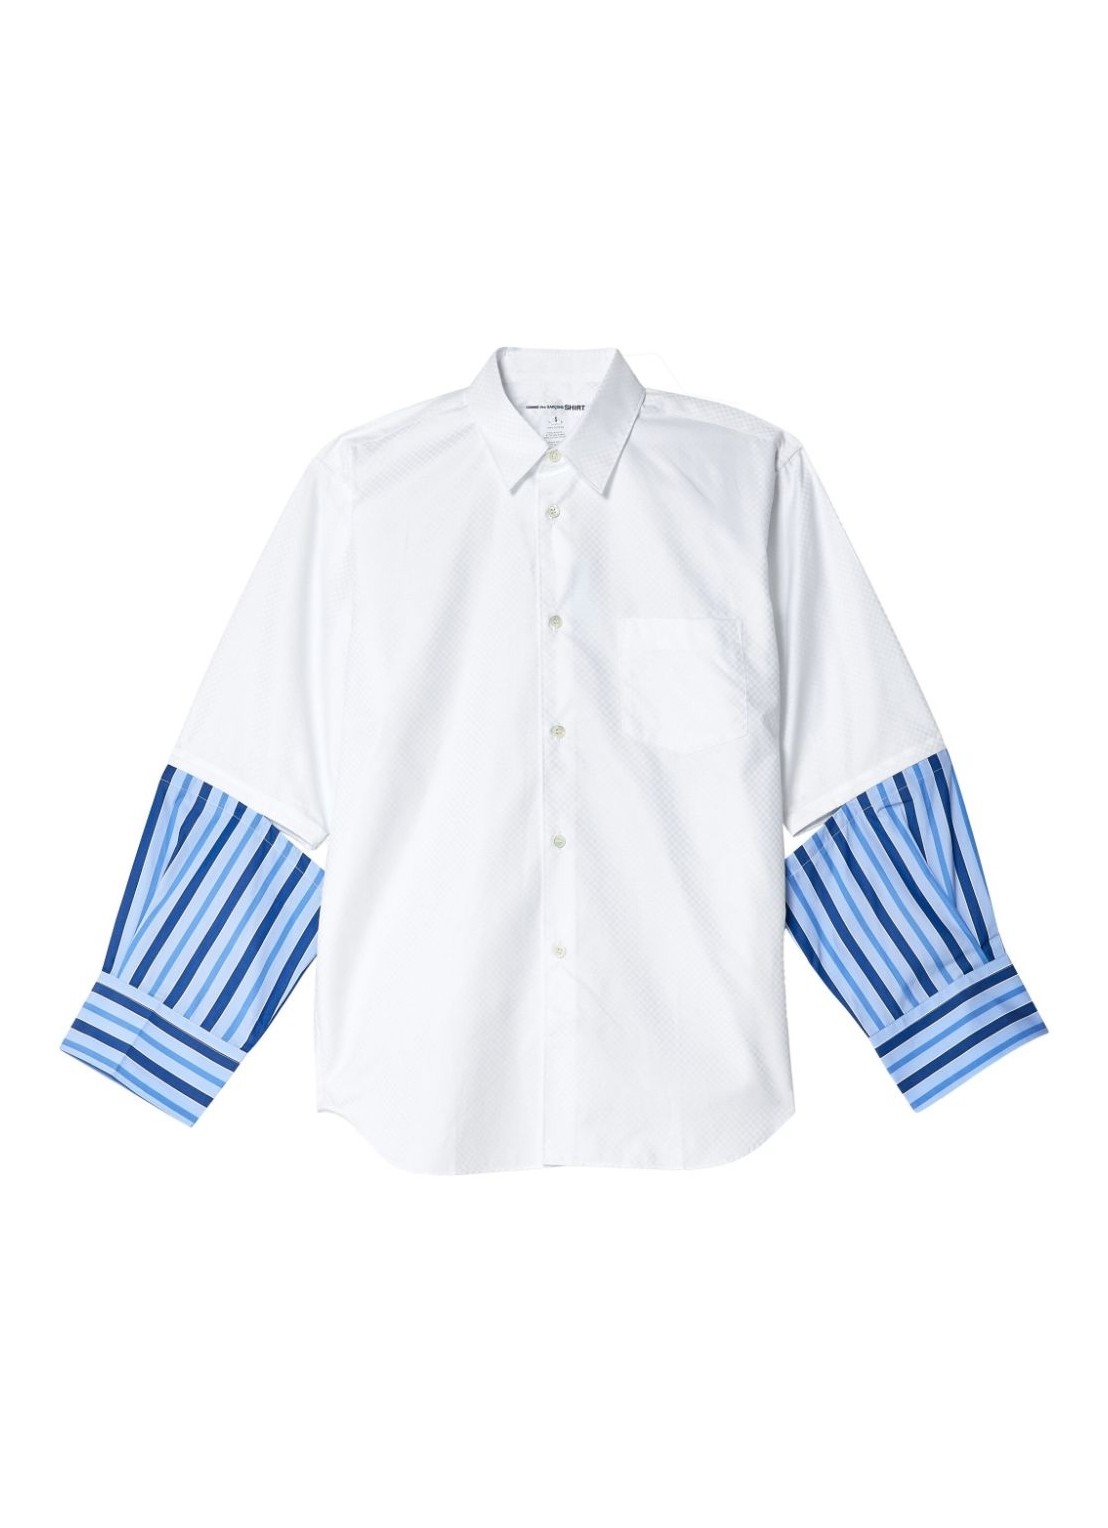 Camiseria comme des garcons shirt manmens shirt woven - fmb032 stripe white talla Azul
 